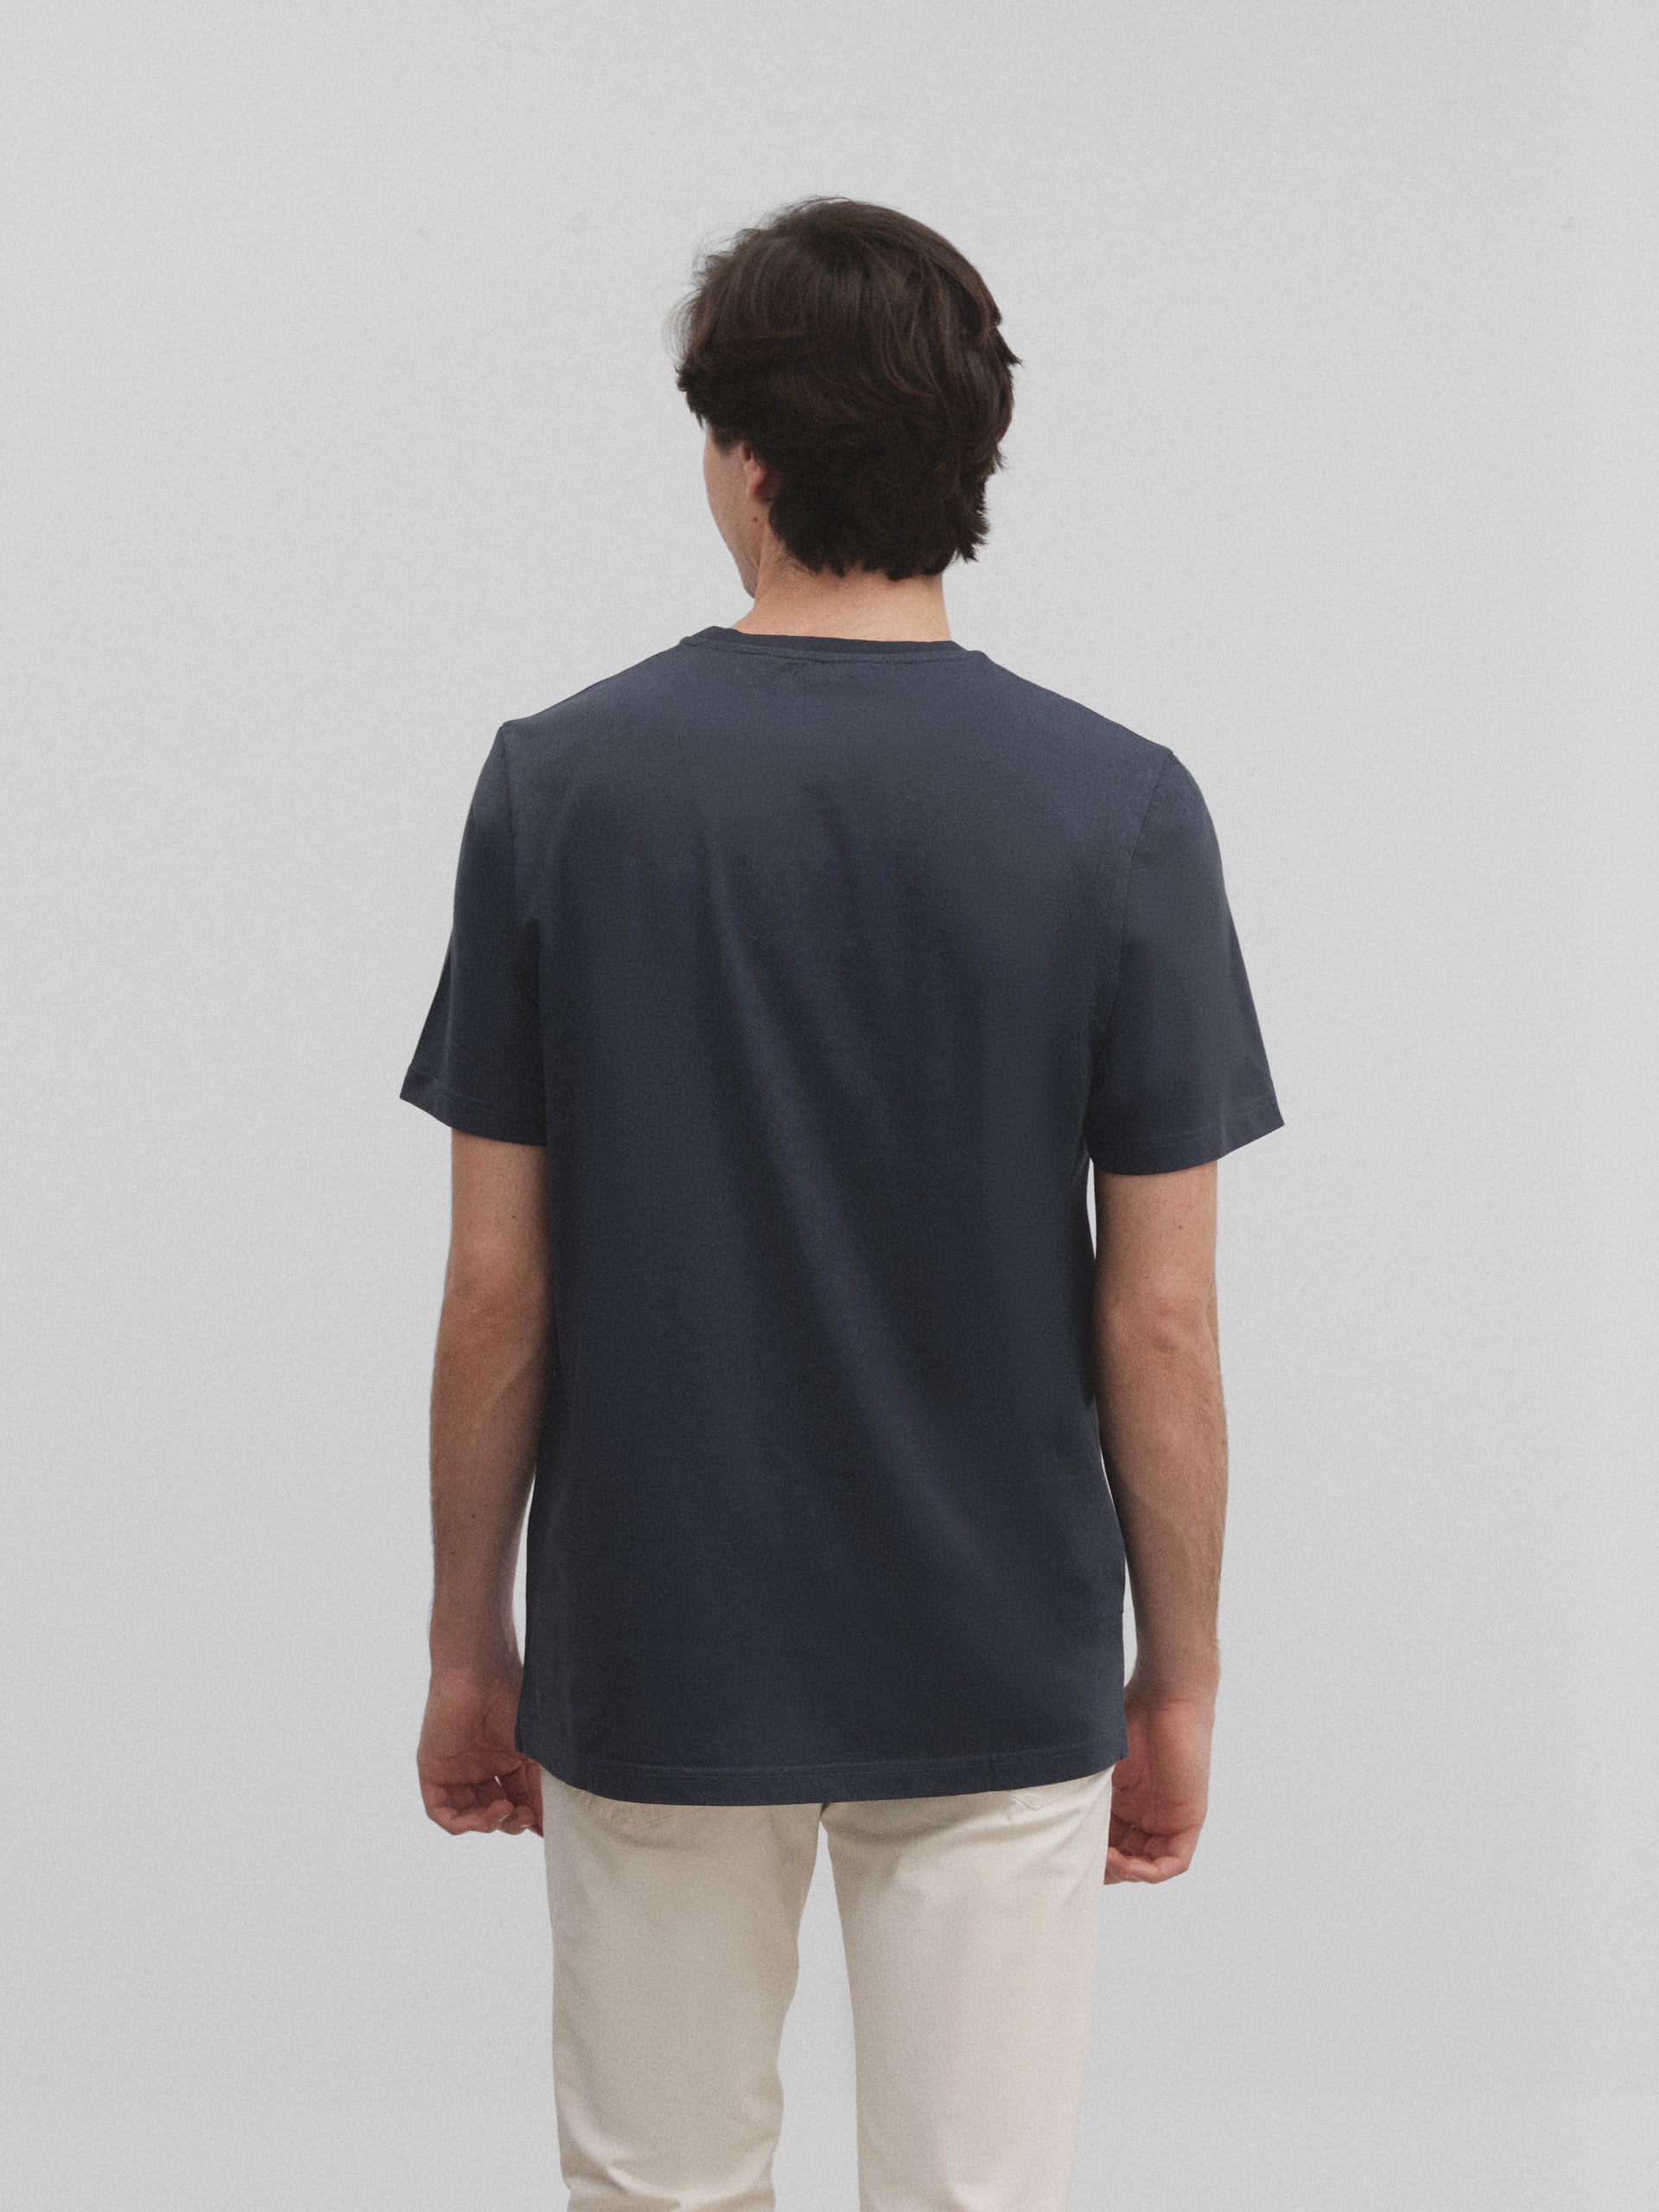 Silbon medium navy blue racket t-shirt